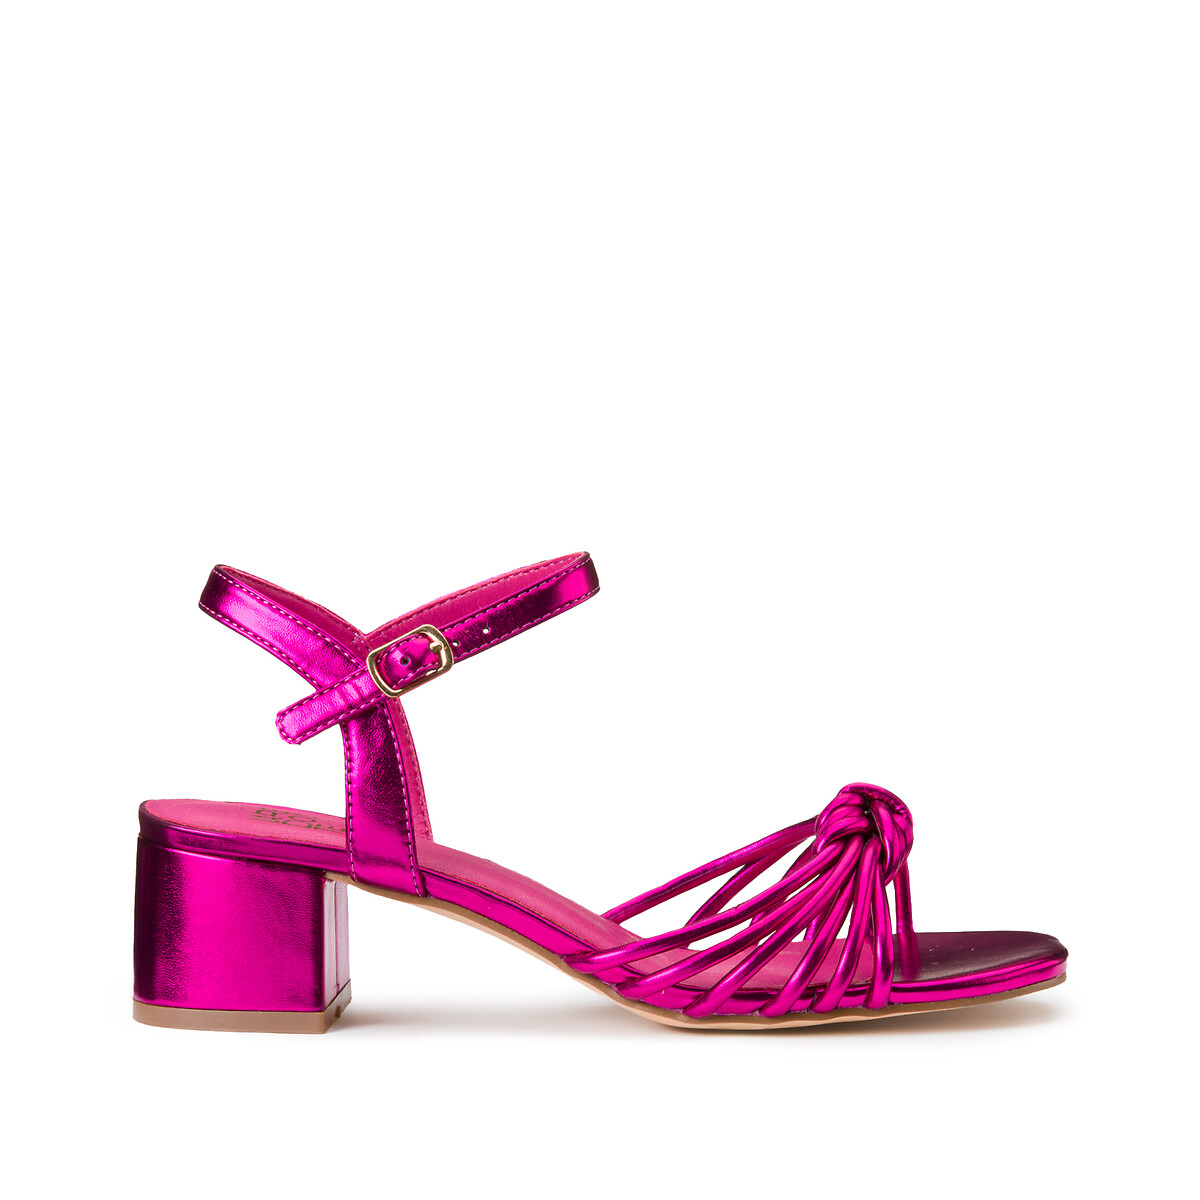 Босоножки на каблуке с металлическим отливом и тонкими ремешками  39 розовый